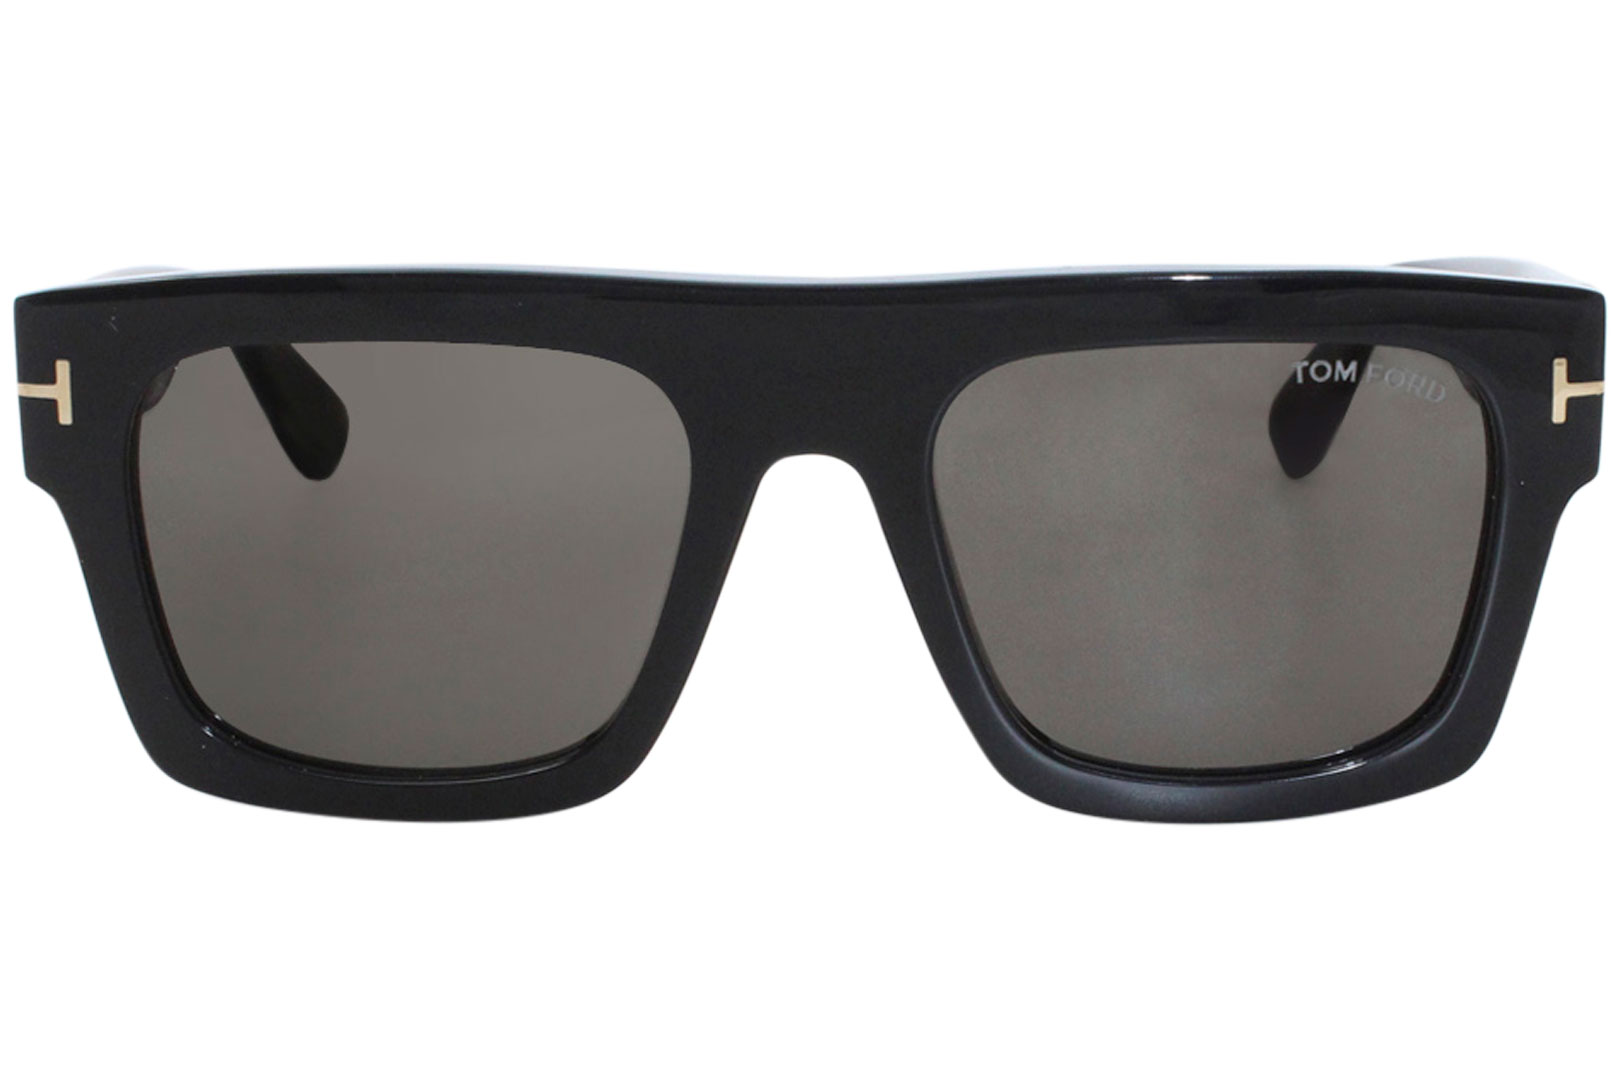 Tom Ford Fausto TF711 Sunglasses Men's Square Shades | JoyLot.com